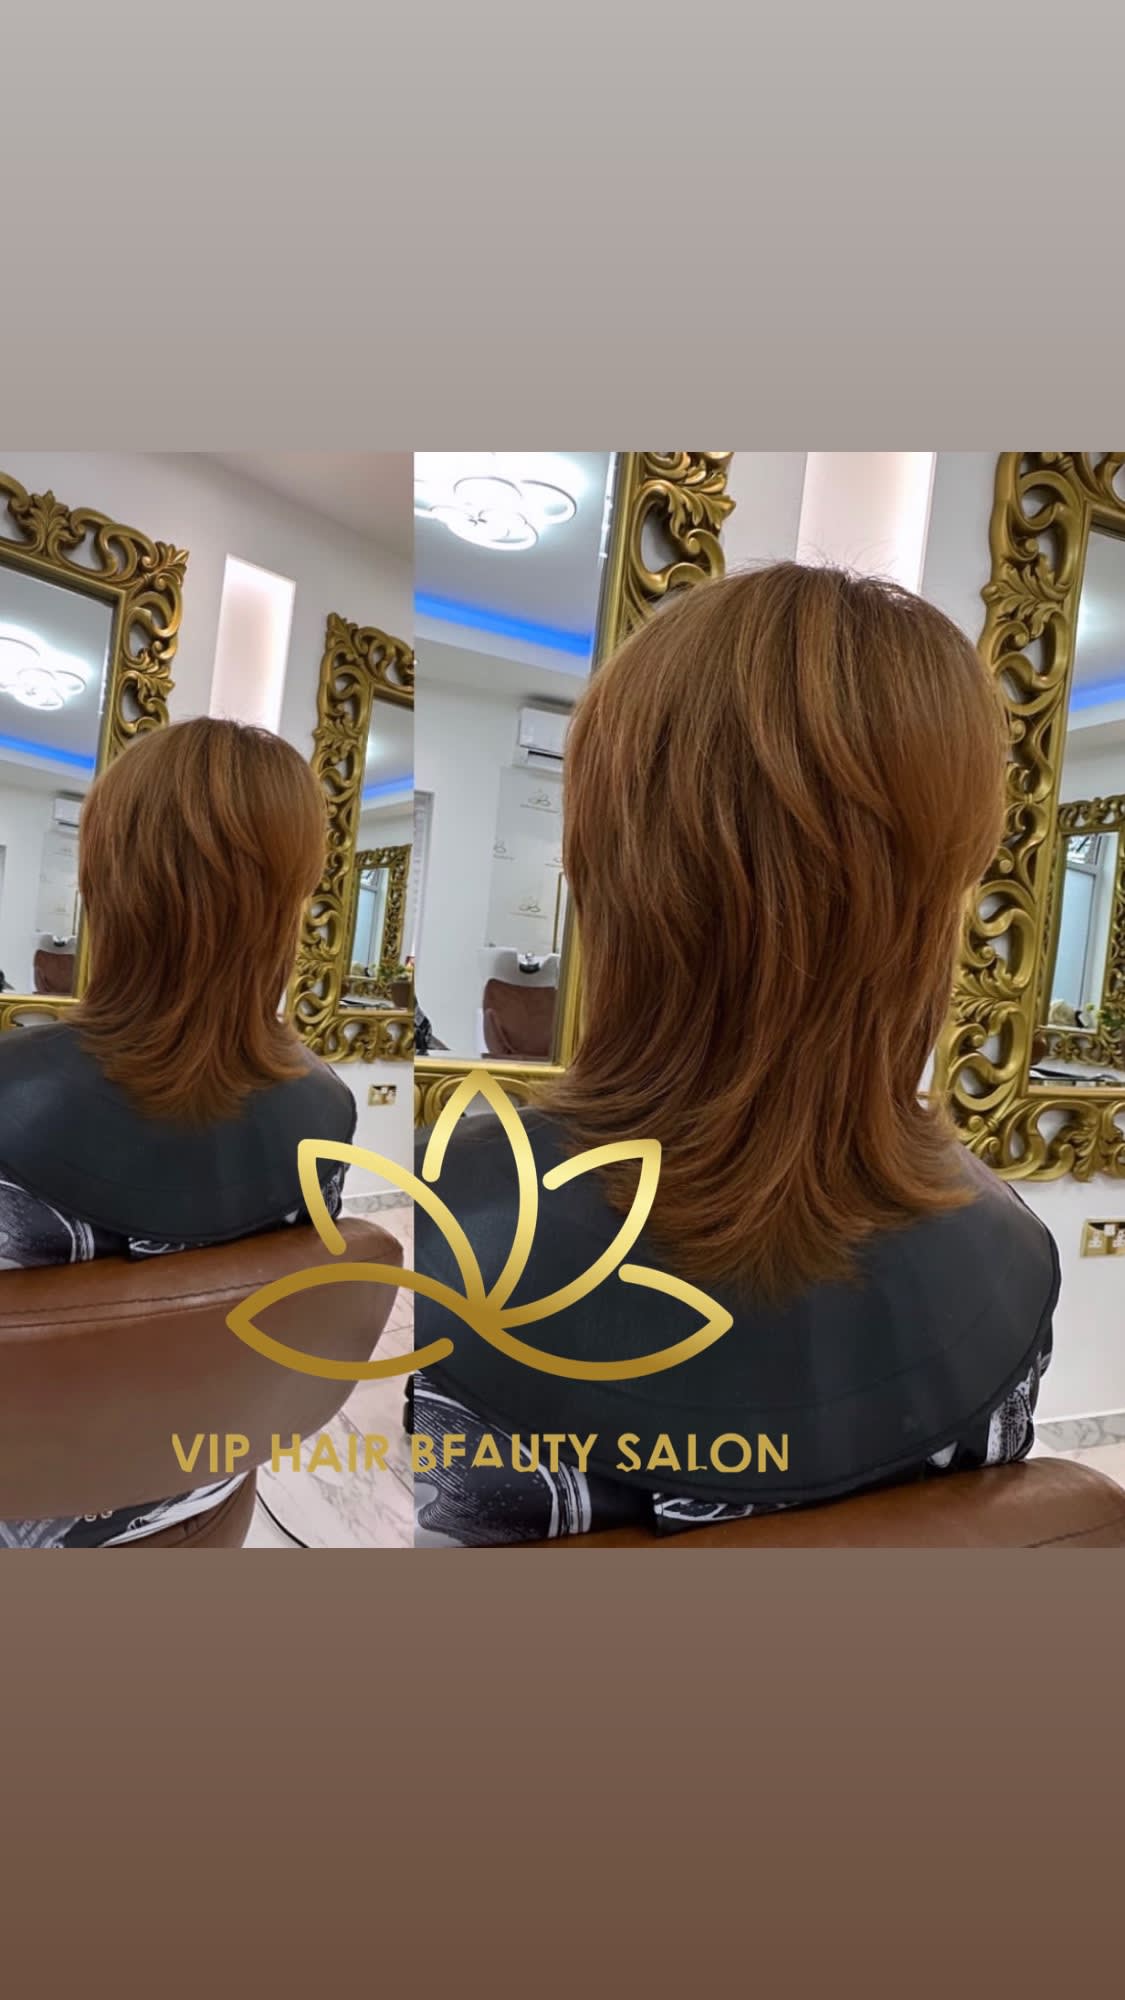 VIP Hair & Beauty Salon Bromsgrove 01527 833445